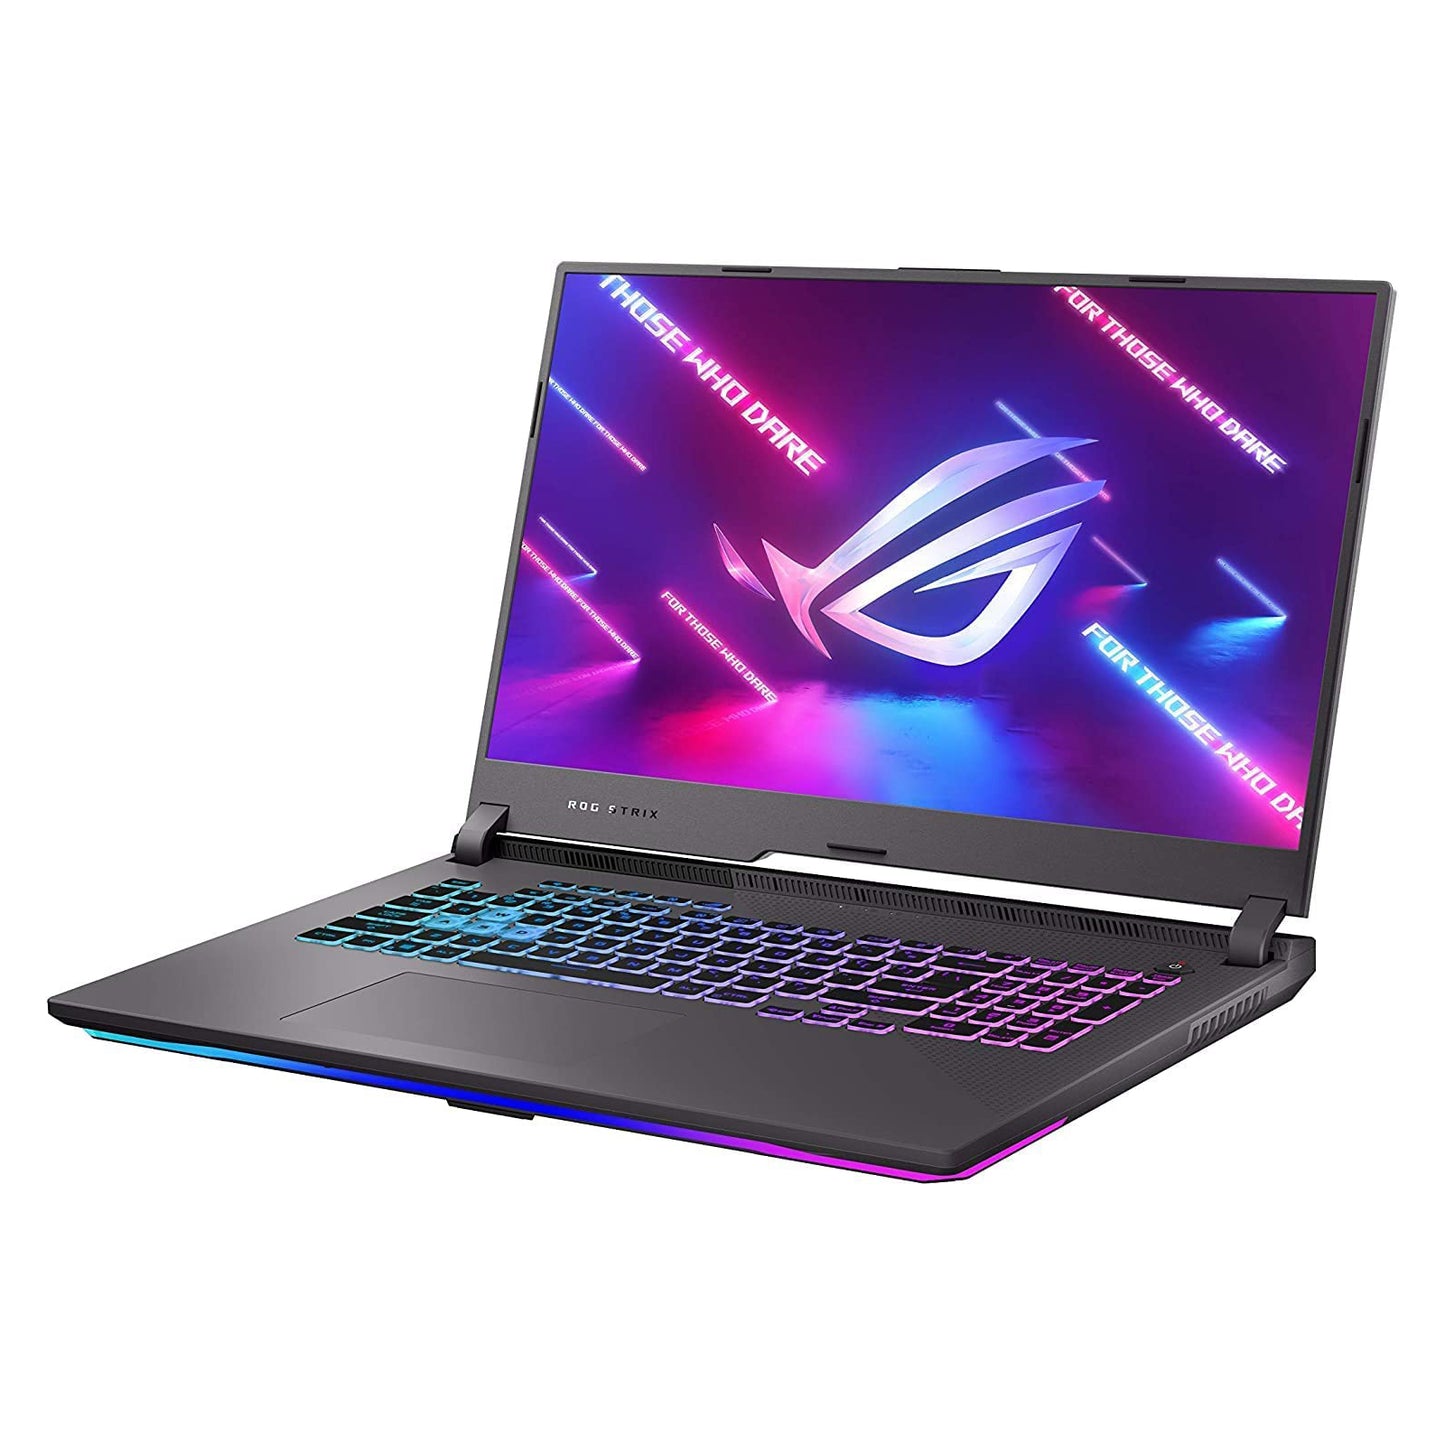 Asus Rog Strix G17 G713IM-UB74 Ryzen 7 4800h Rtx 3060 144hz 17.3" RGB Gaming Laptop Offers (New OB)